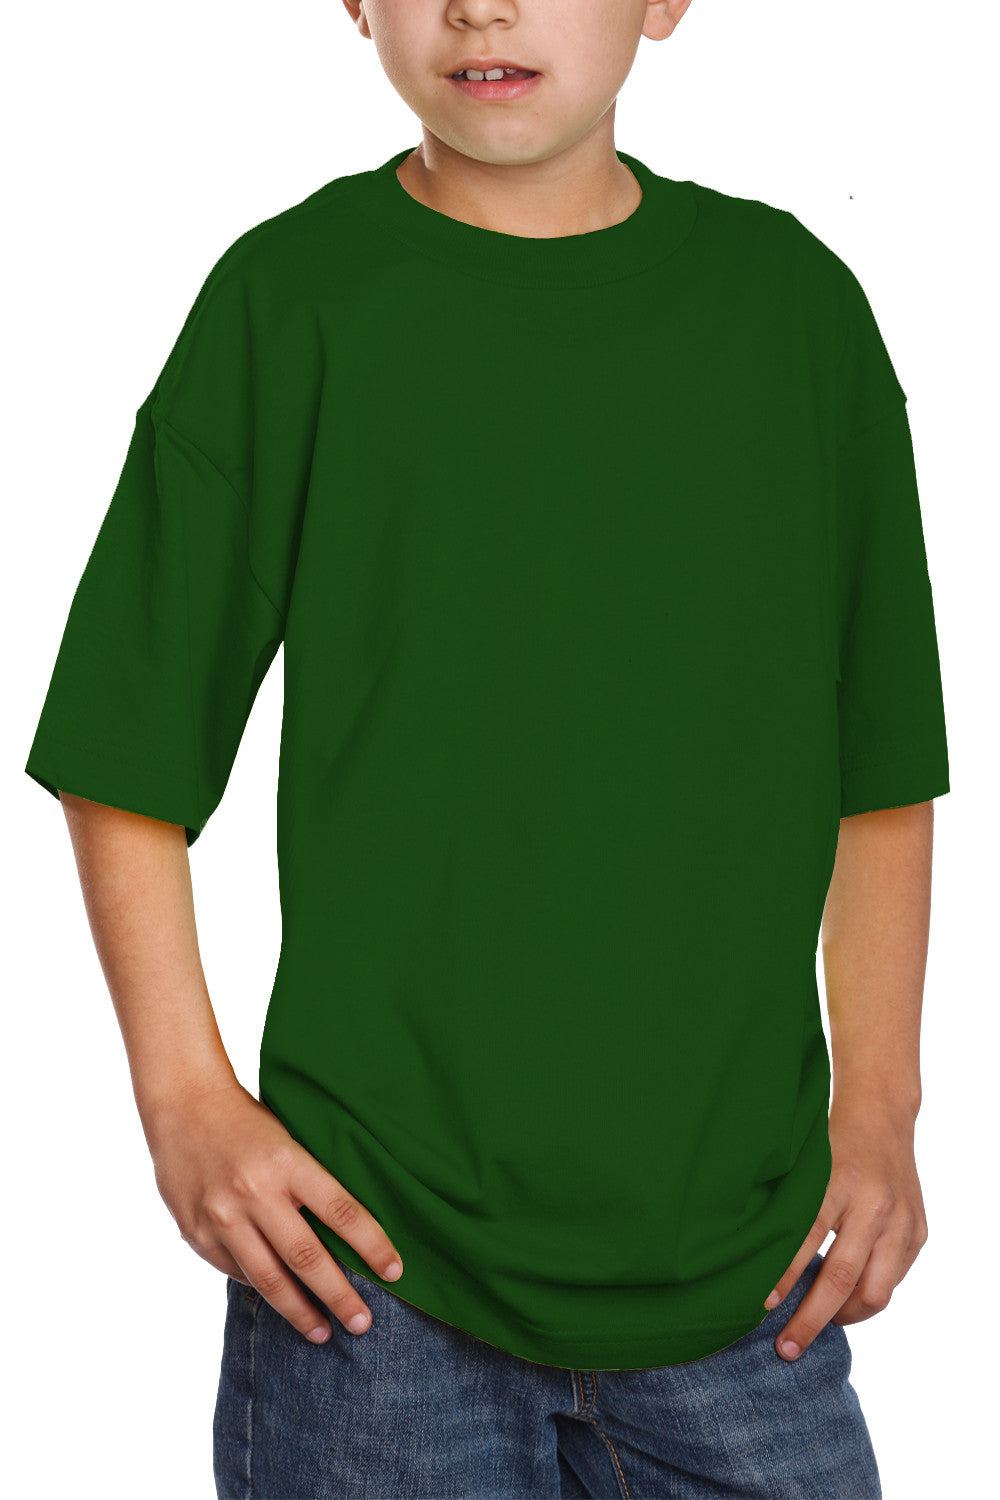 Lot of 5 Gildan Youth Size Medium Kelly Green Short Sleeve Crew Neck  T-Shirt New